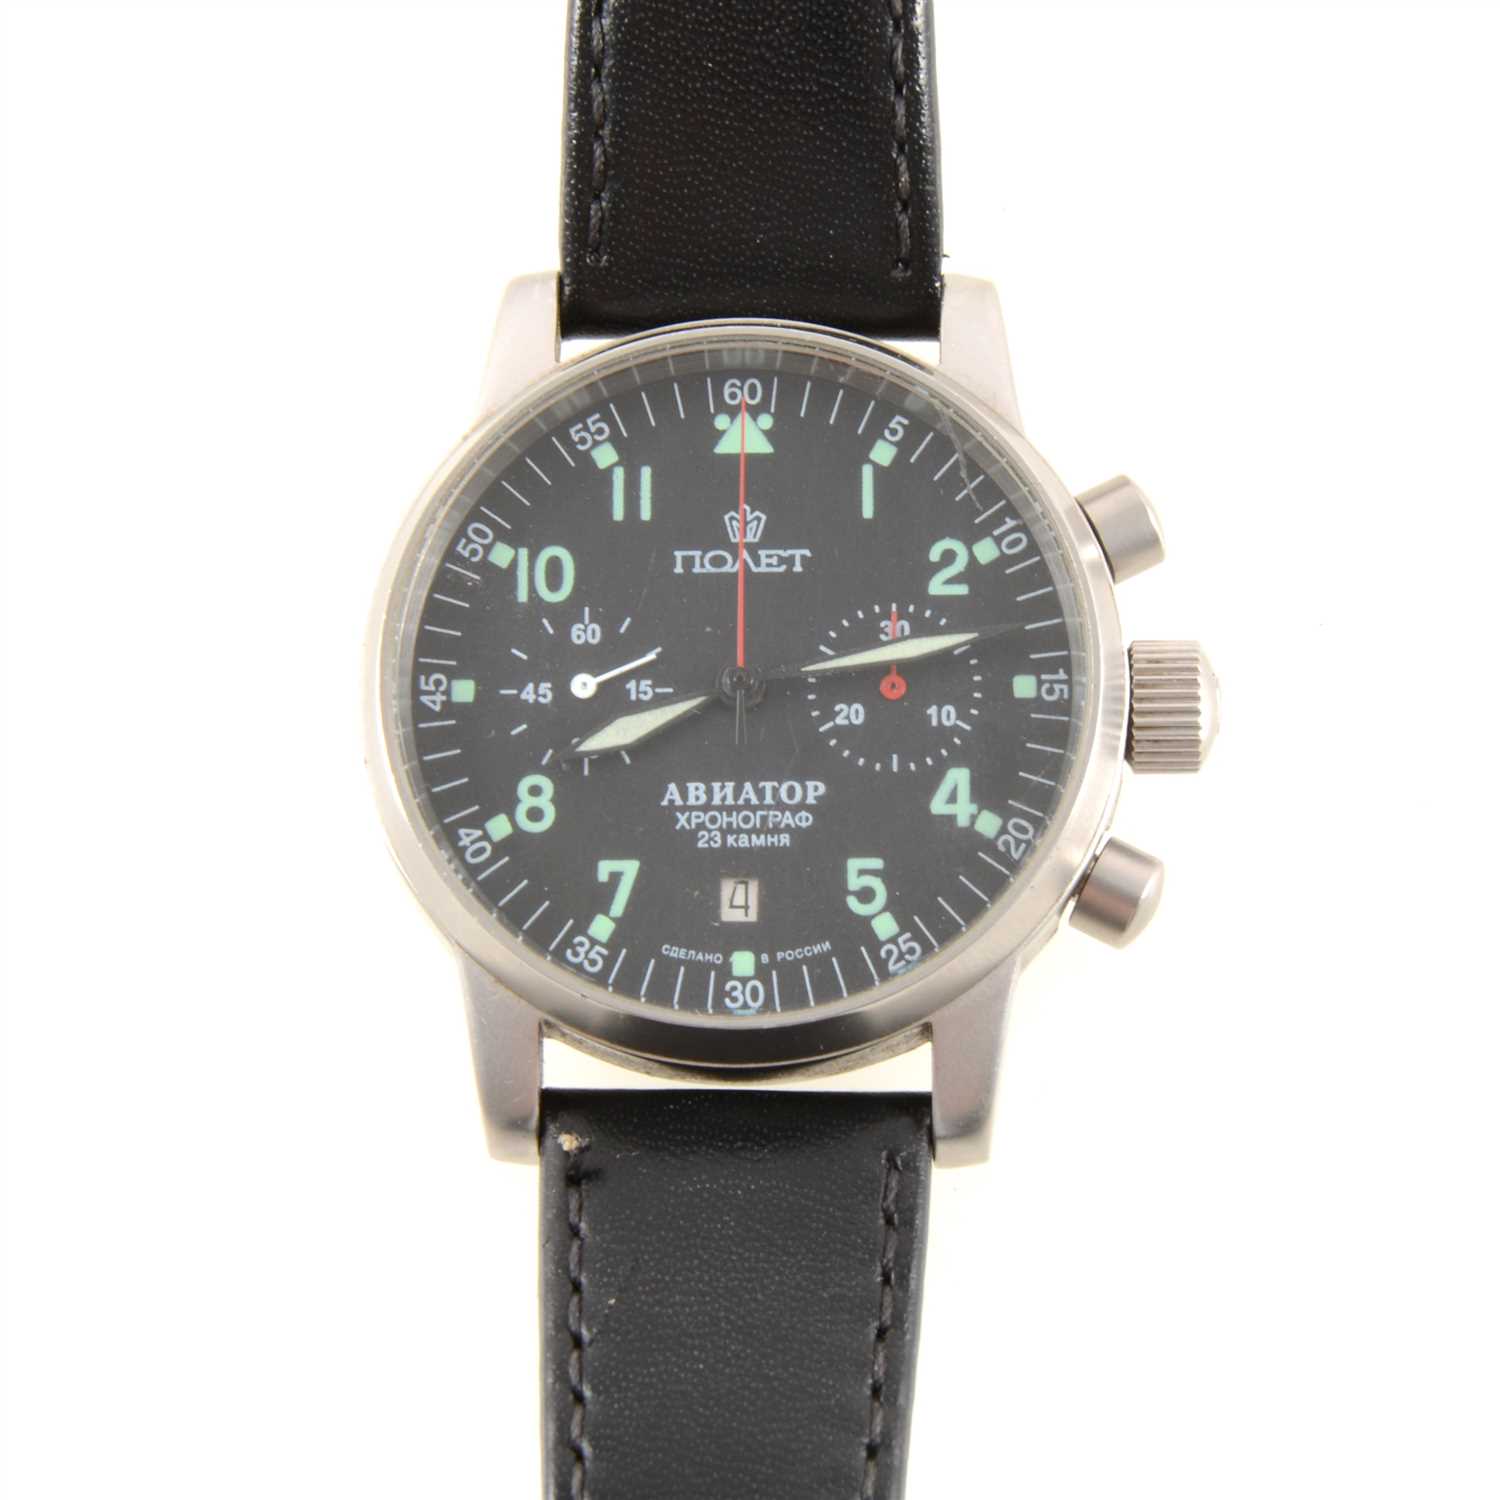 Lot 304 - Poljot - a gentleman's Russian aviator chronograph wrist watch